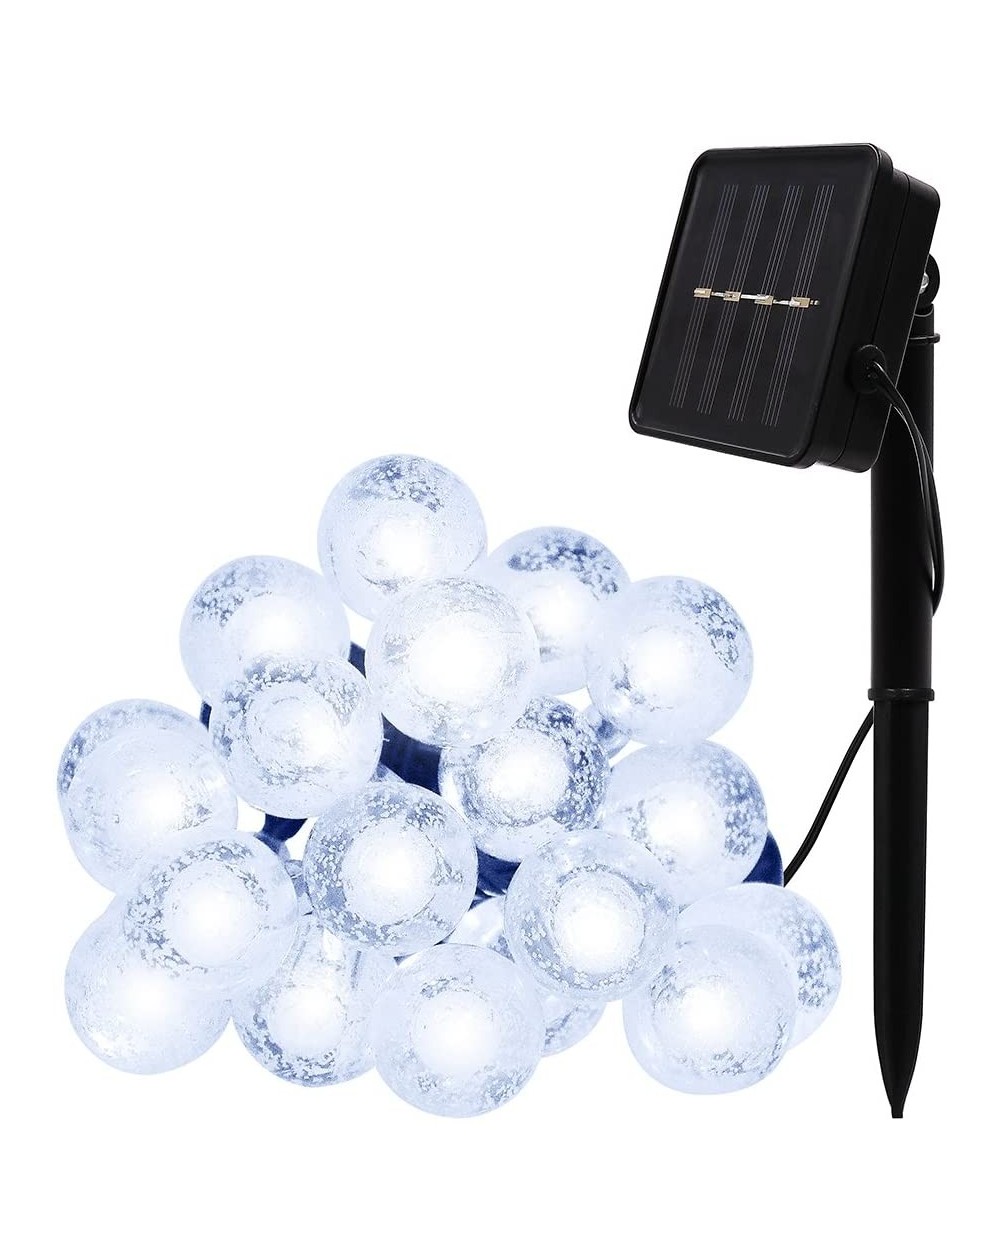 Outdoor String Lights Solar String Lights- 40ft 100 Units Crystal Balls Flexible Waterproof LED Fairy Light- Outdoor Starry L...